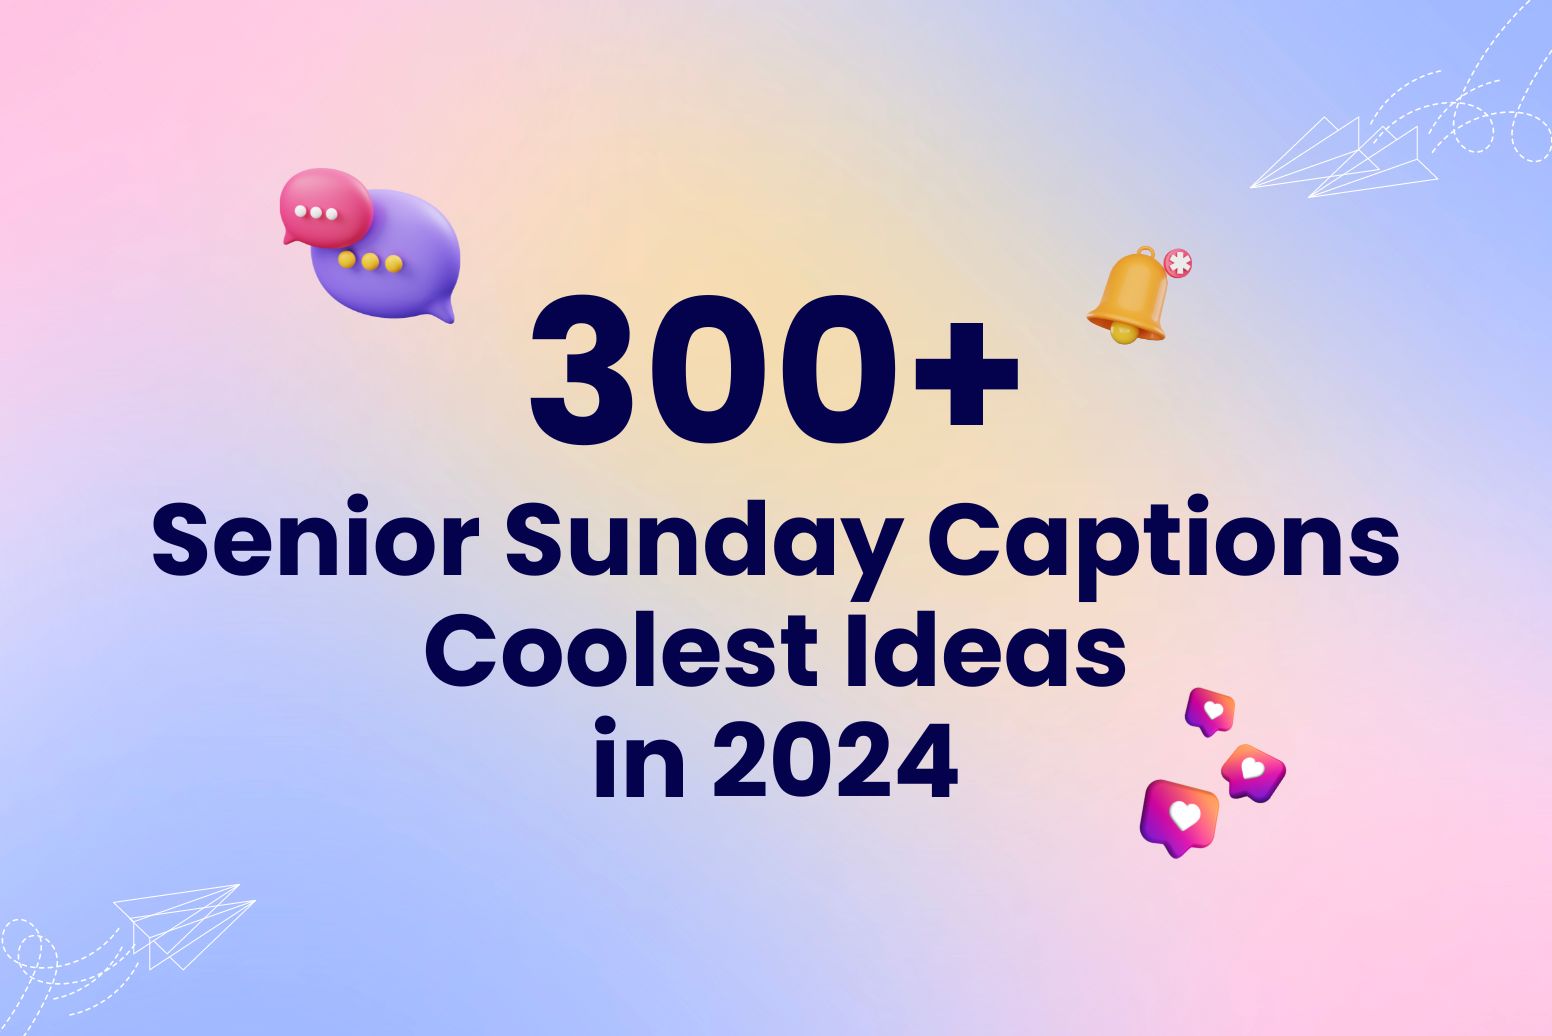 Senior Sunday Captions 2024 300+ Coolest Ideas